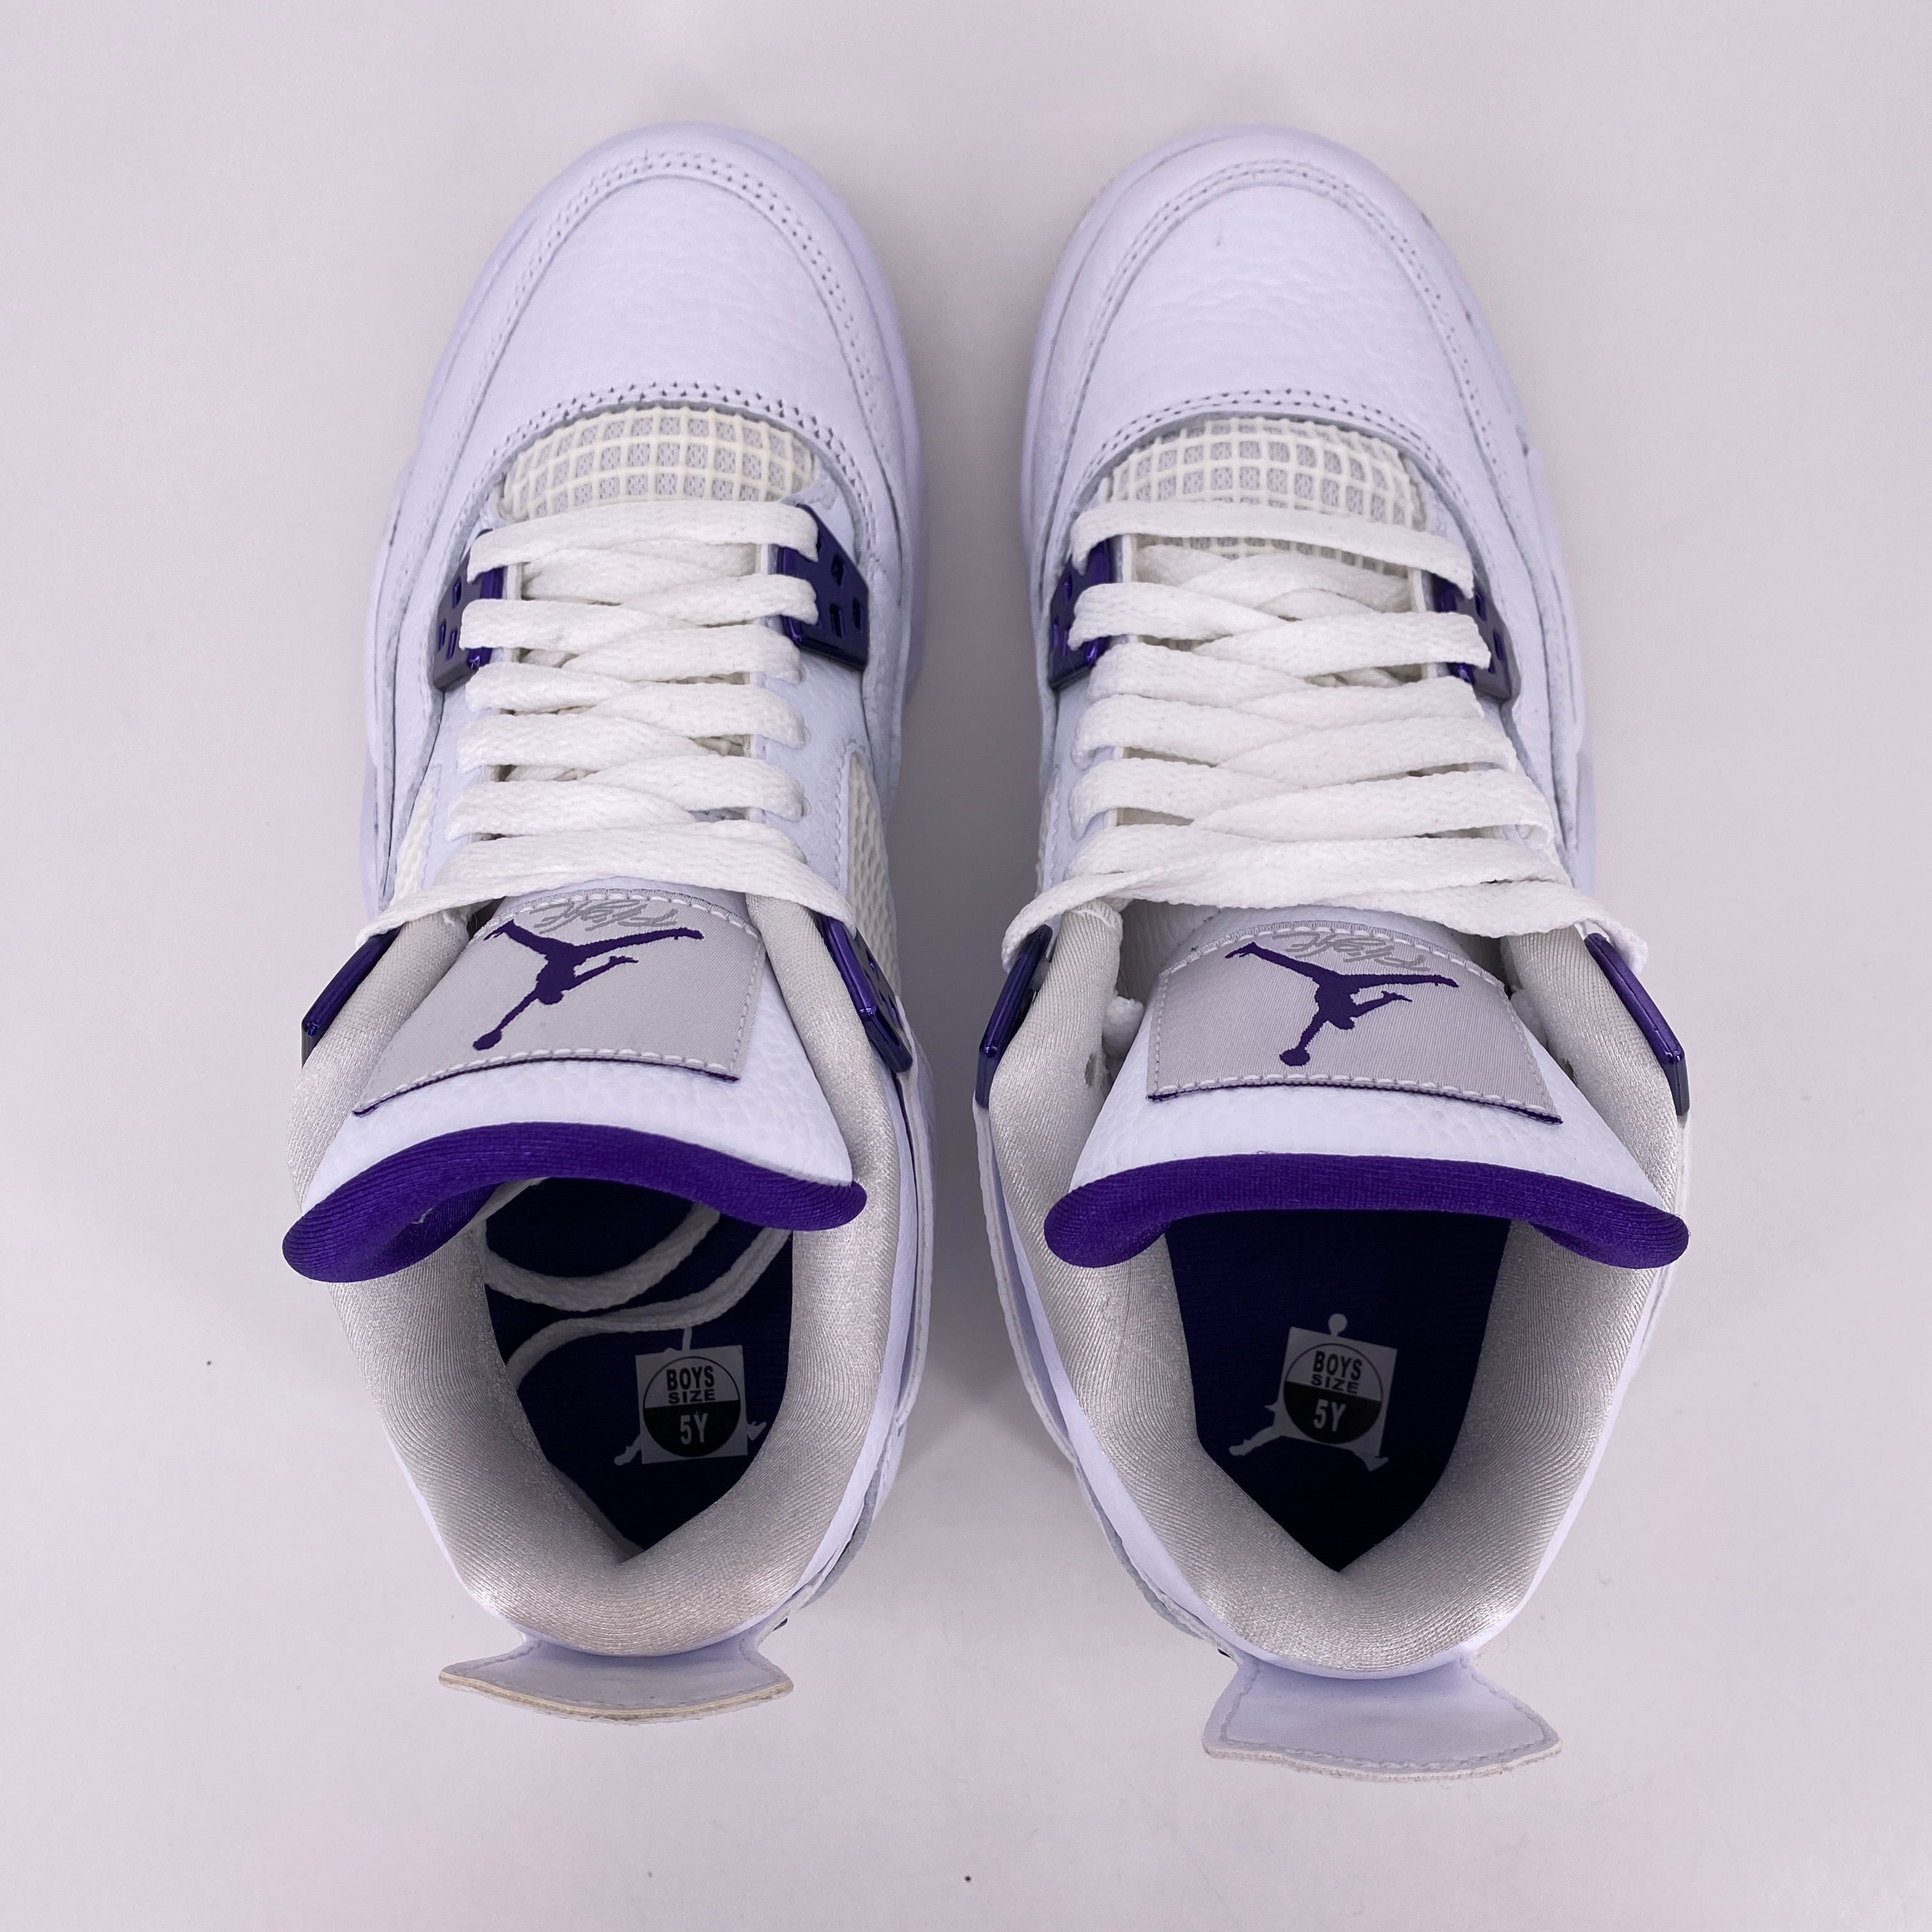 Air Jordan (GS) 4 Retro "Metallic Purple" 2020 Used Size 5Y